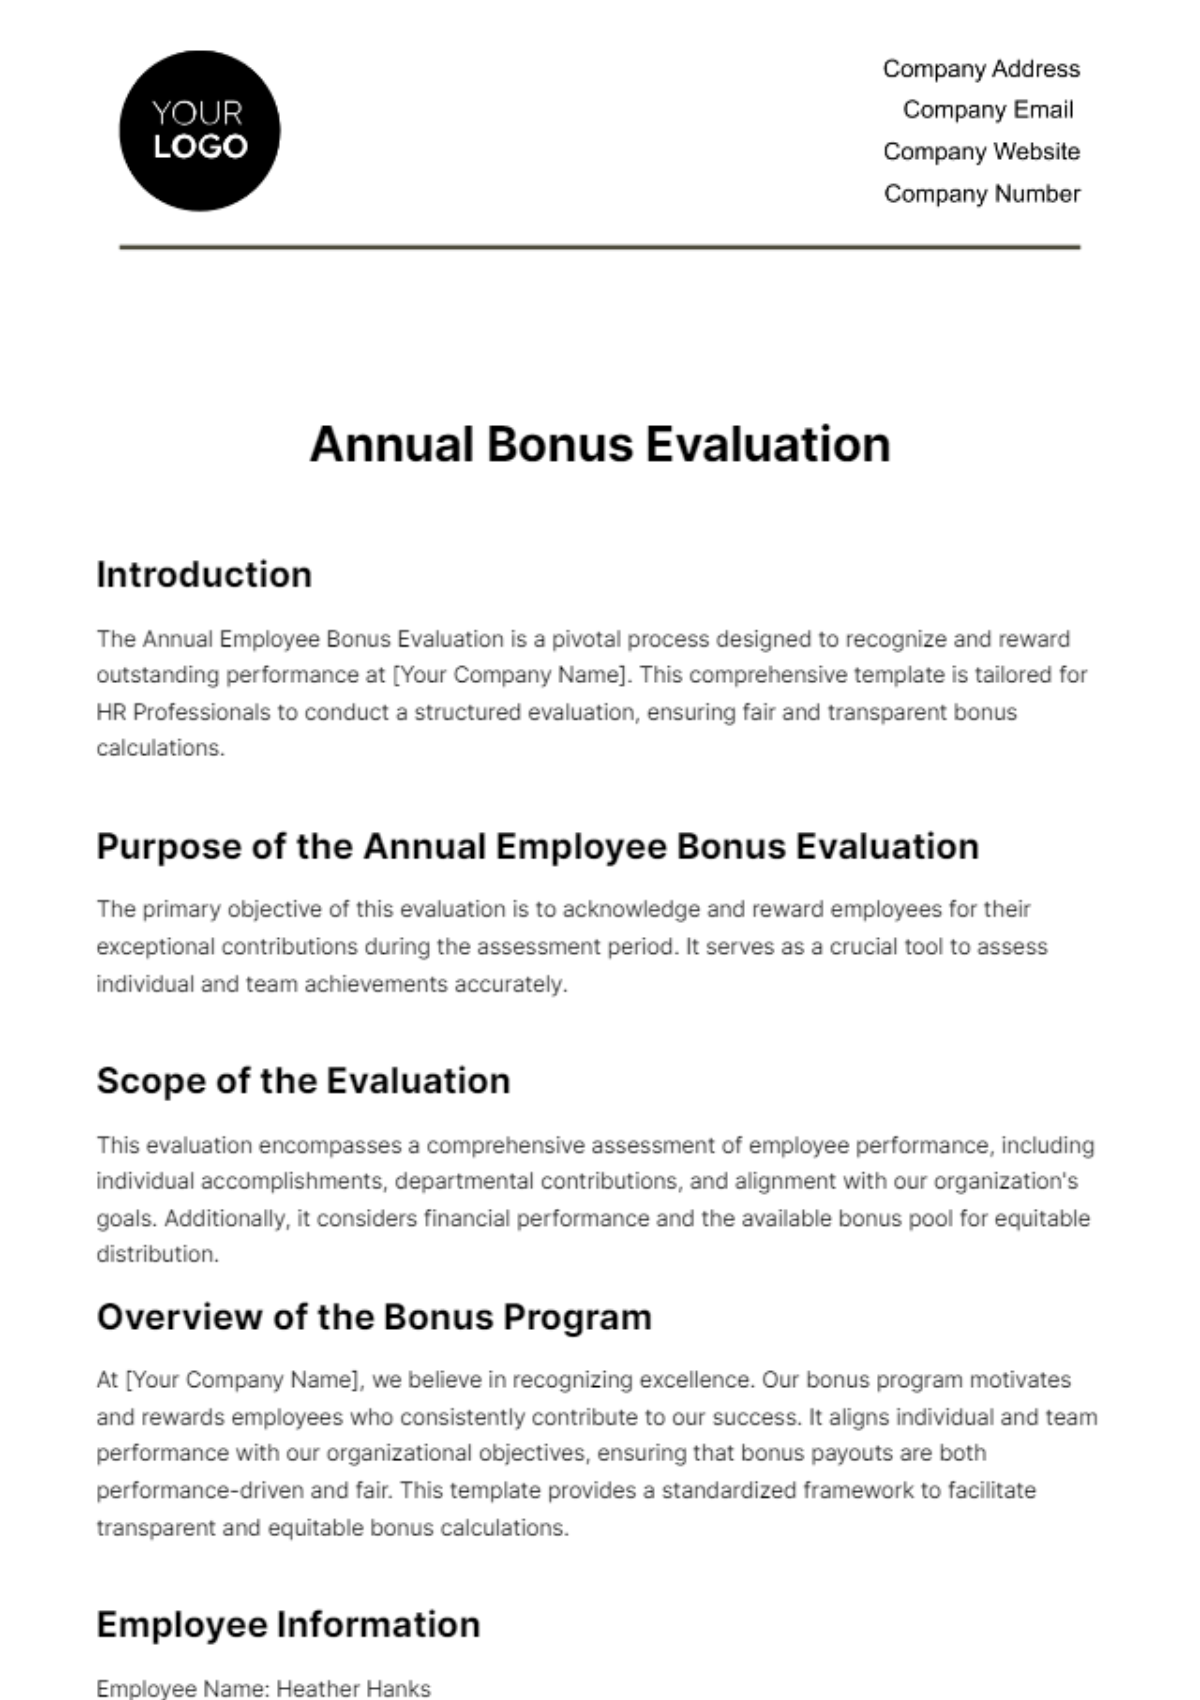 Free Annual Bonus Evaluation HR Template